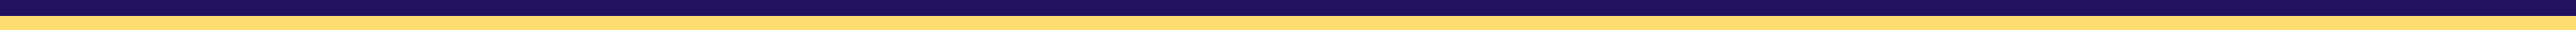 Horizontal Purple Yellow Bar